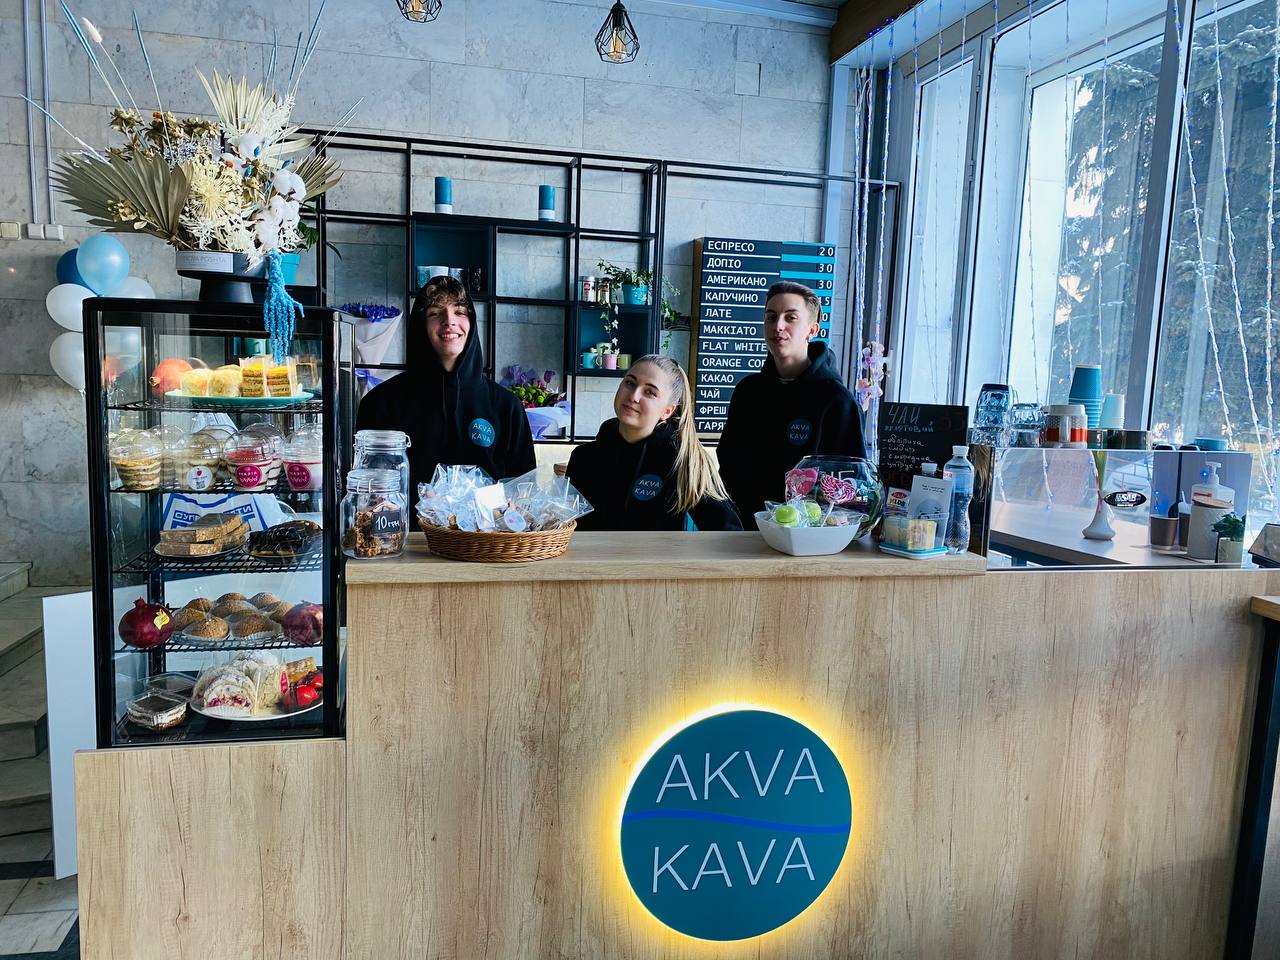 Akva kava coffee shop